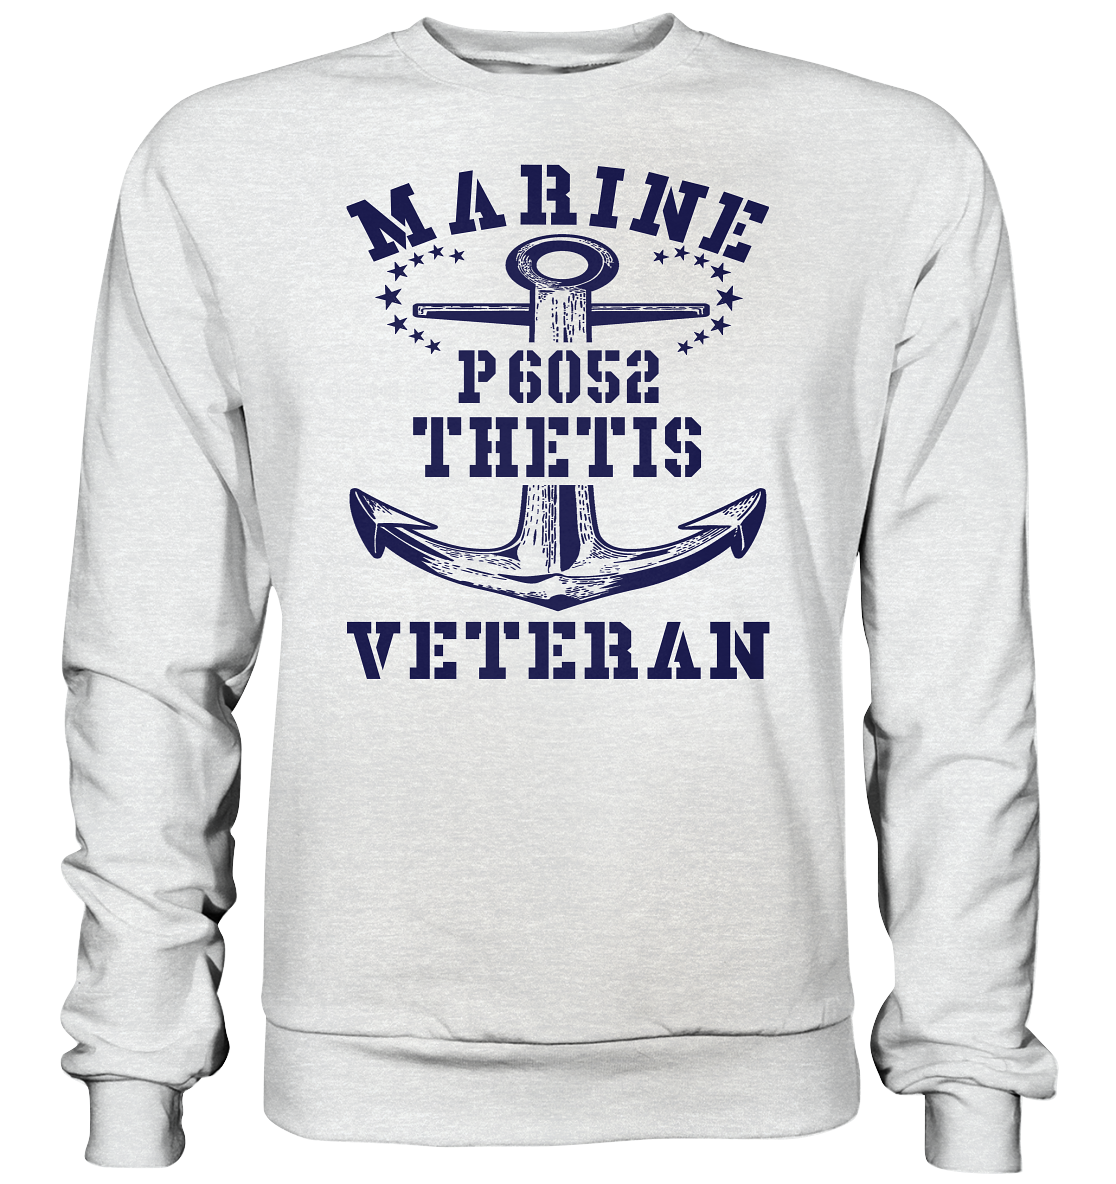 U-Jagdboot P6052 THETIS Marine Veteran - Premium Sweatshirt